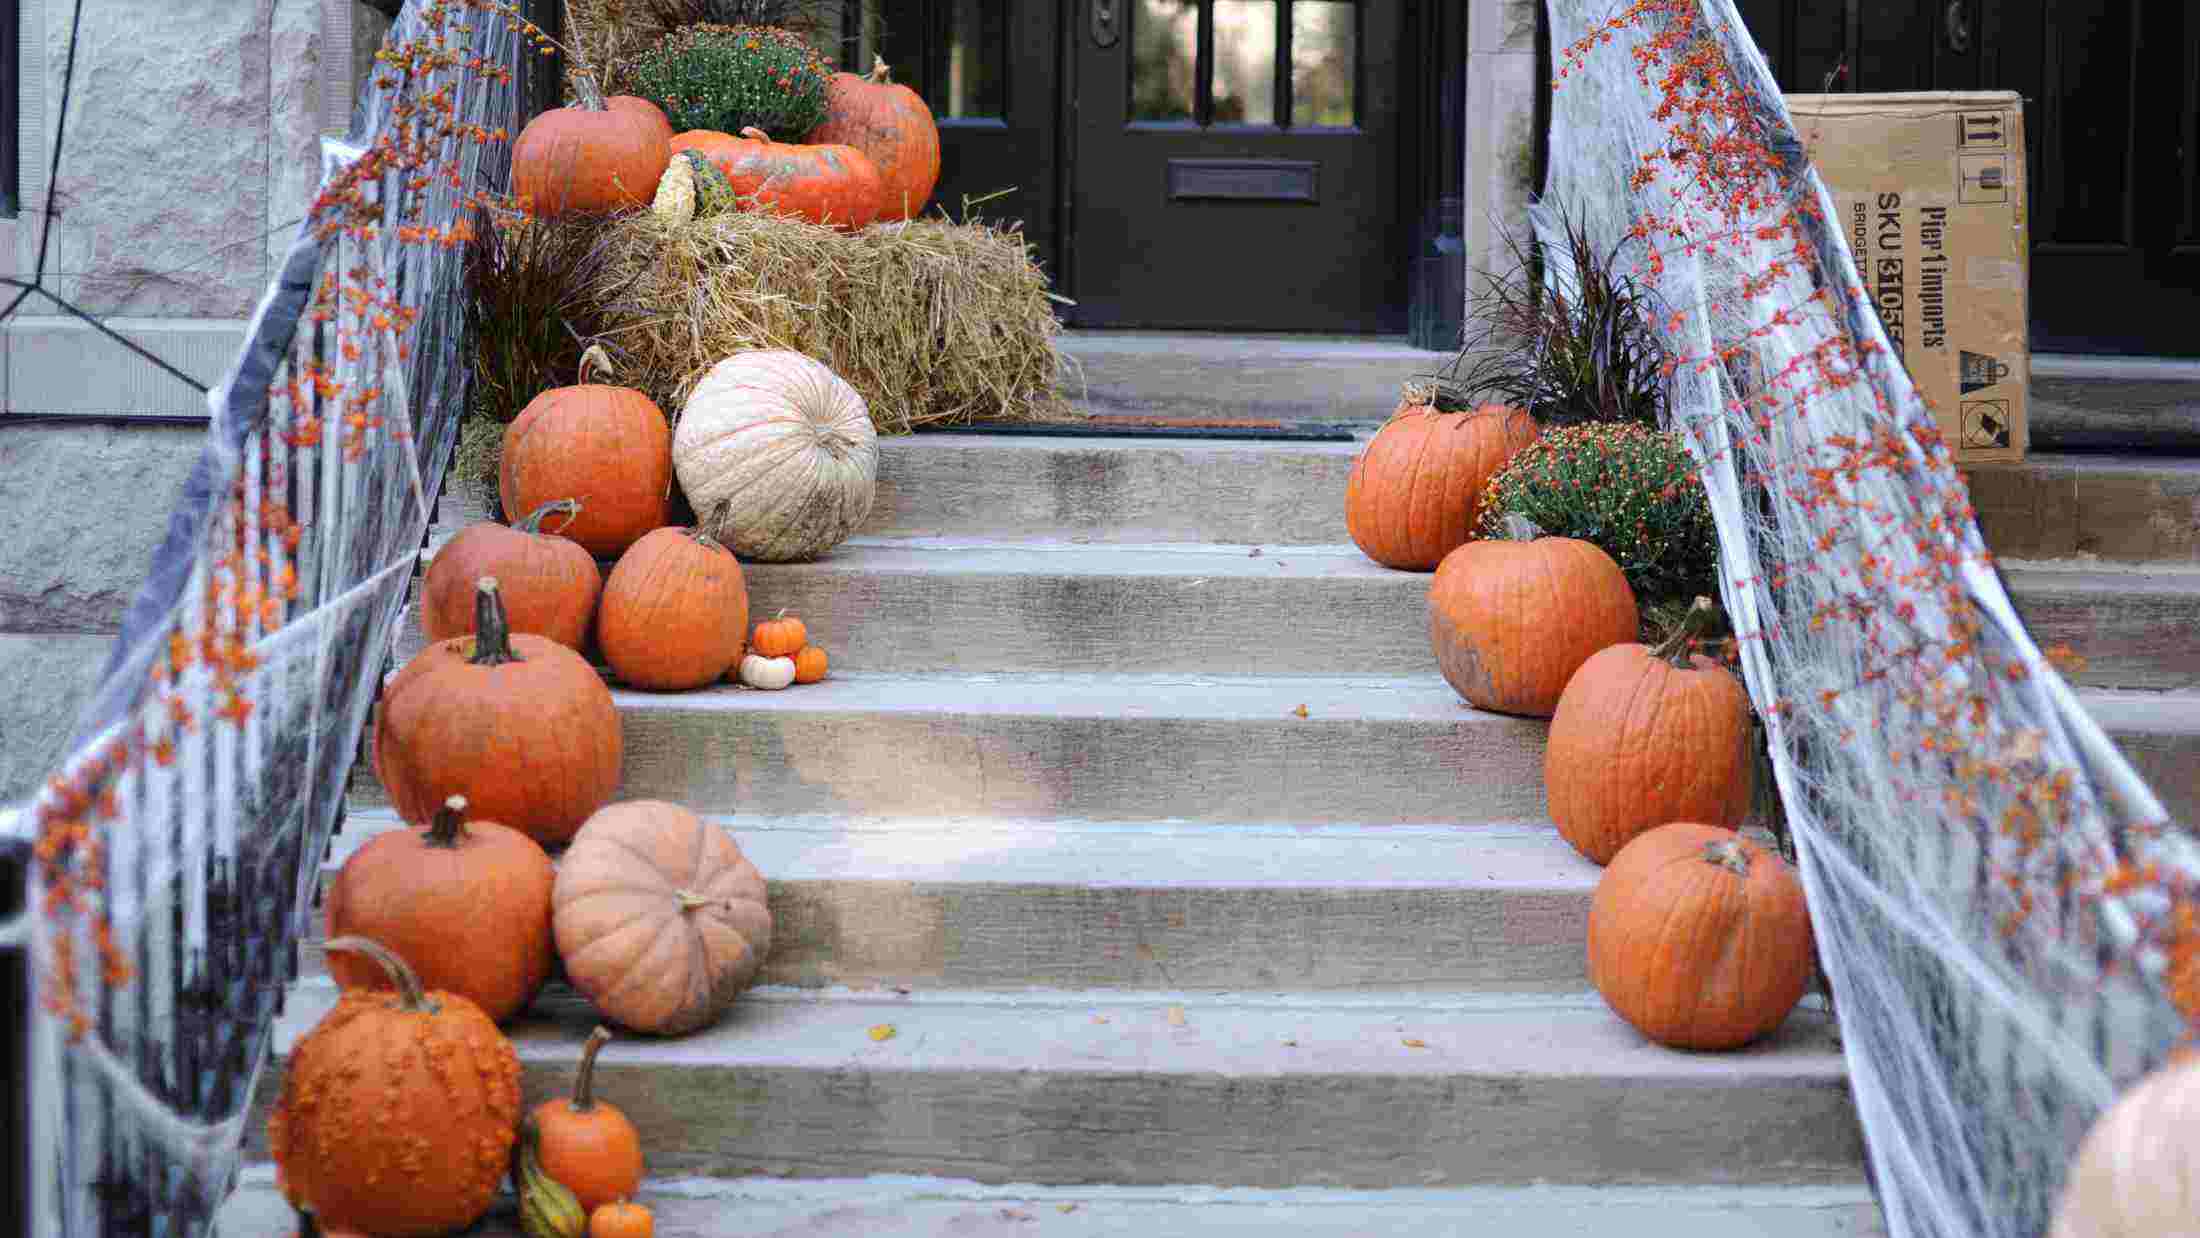 Pumpkins lining a stairway